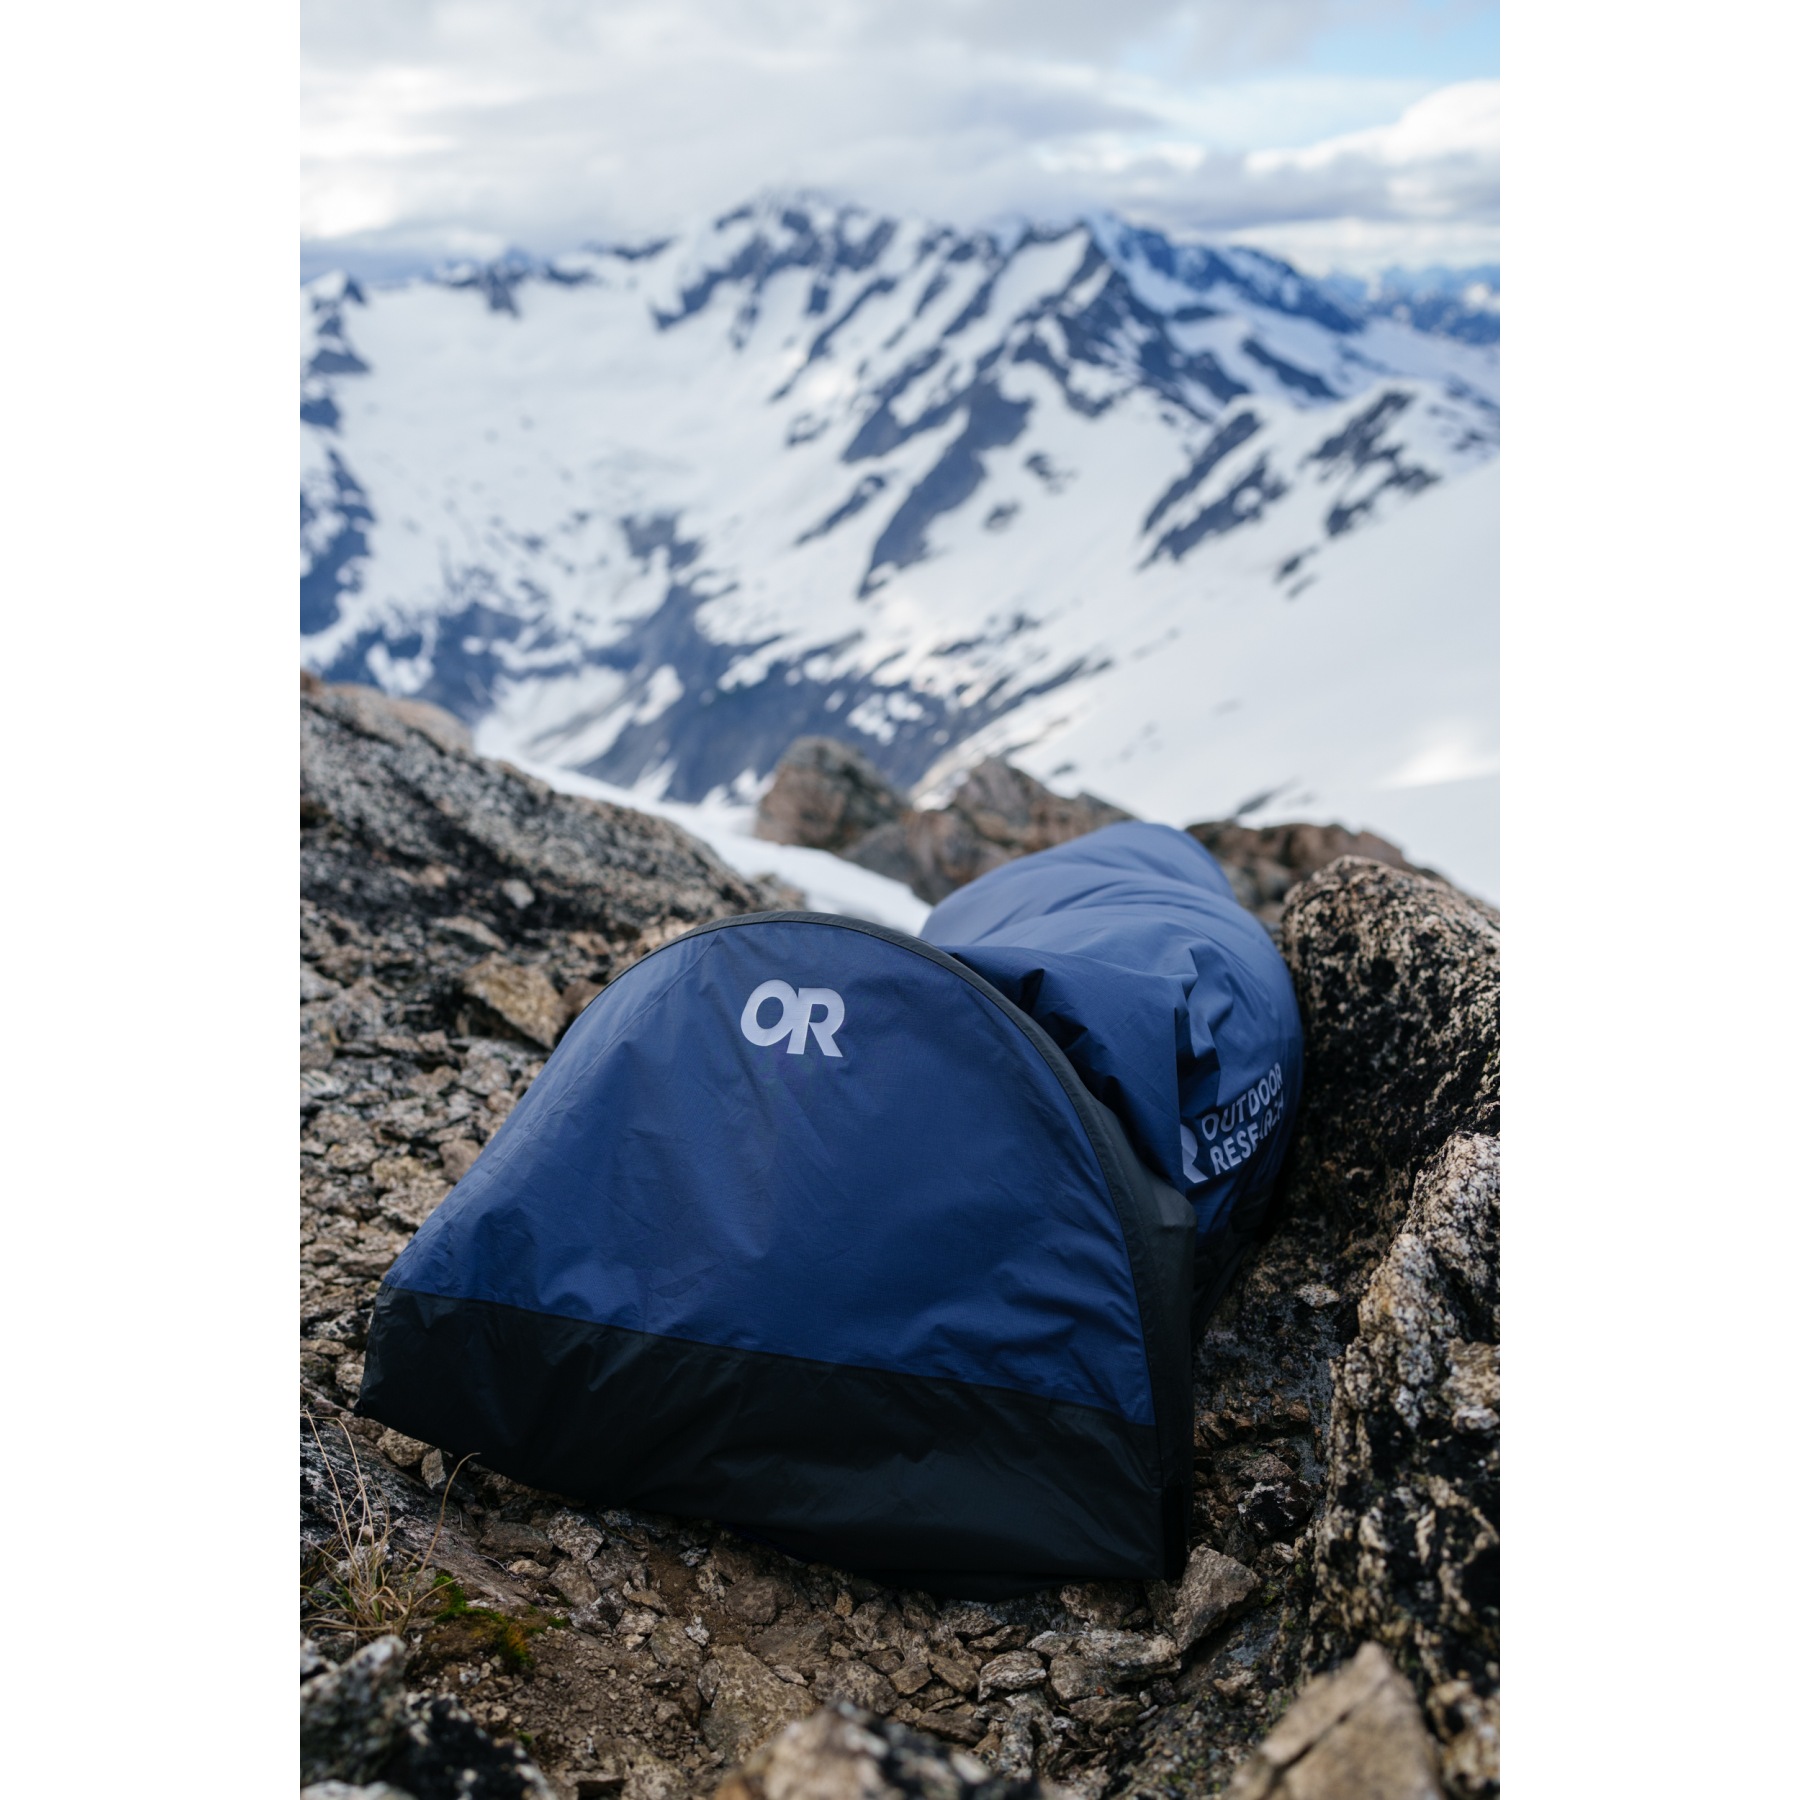 OUTDOOR RESEARCH Alpine AscentShell Bivy